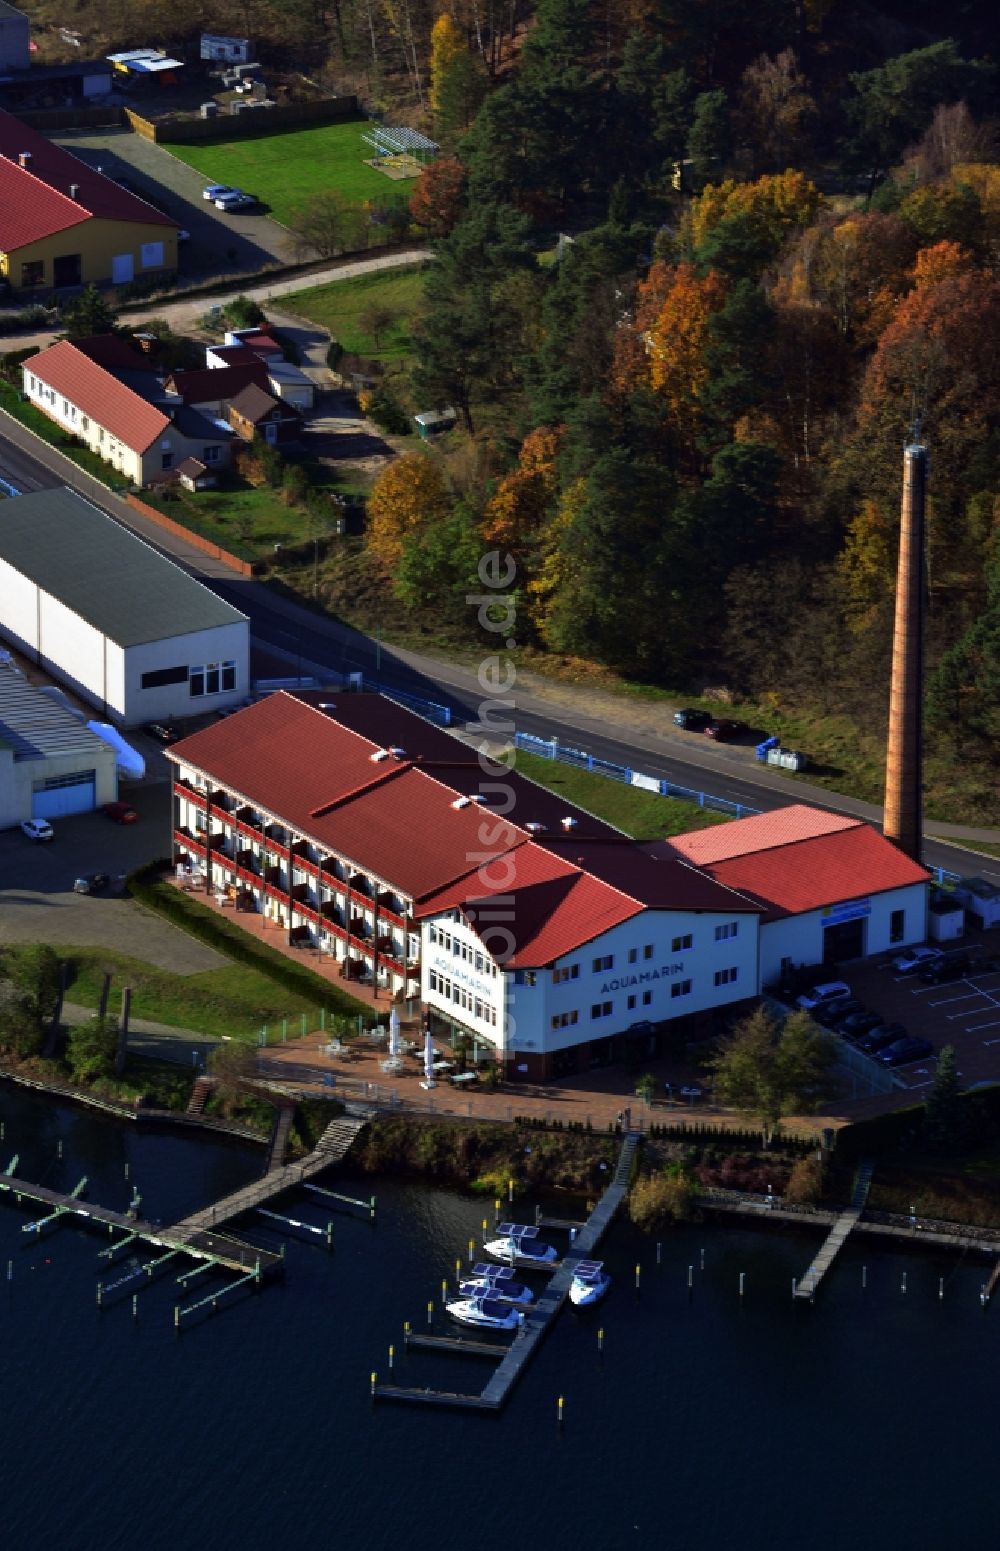 Luftaufnahme Joachimsthal - Restaurant Aquamarin in Joachimsthal im Bundesland Brandenburg